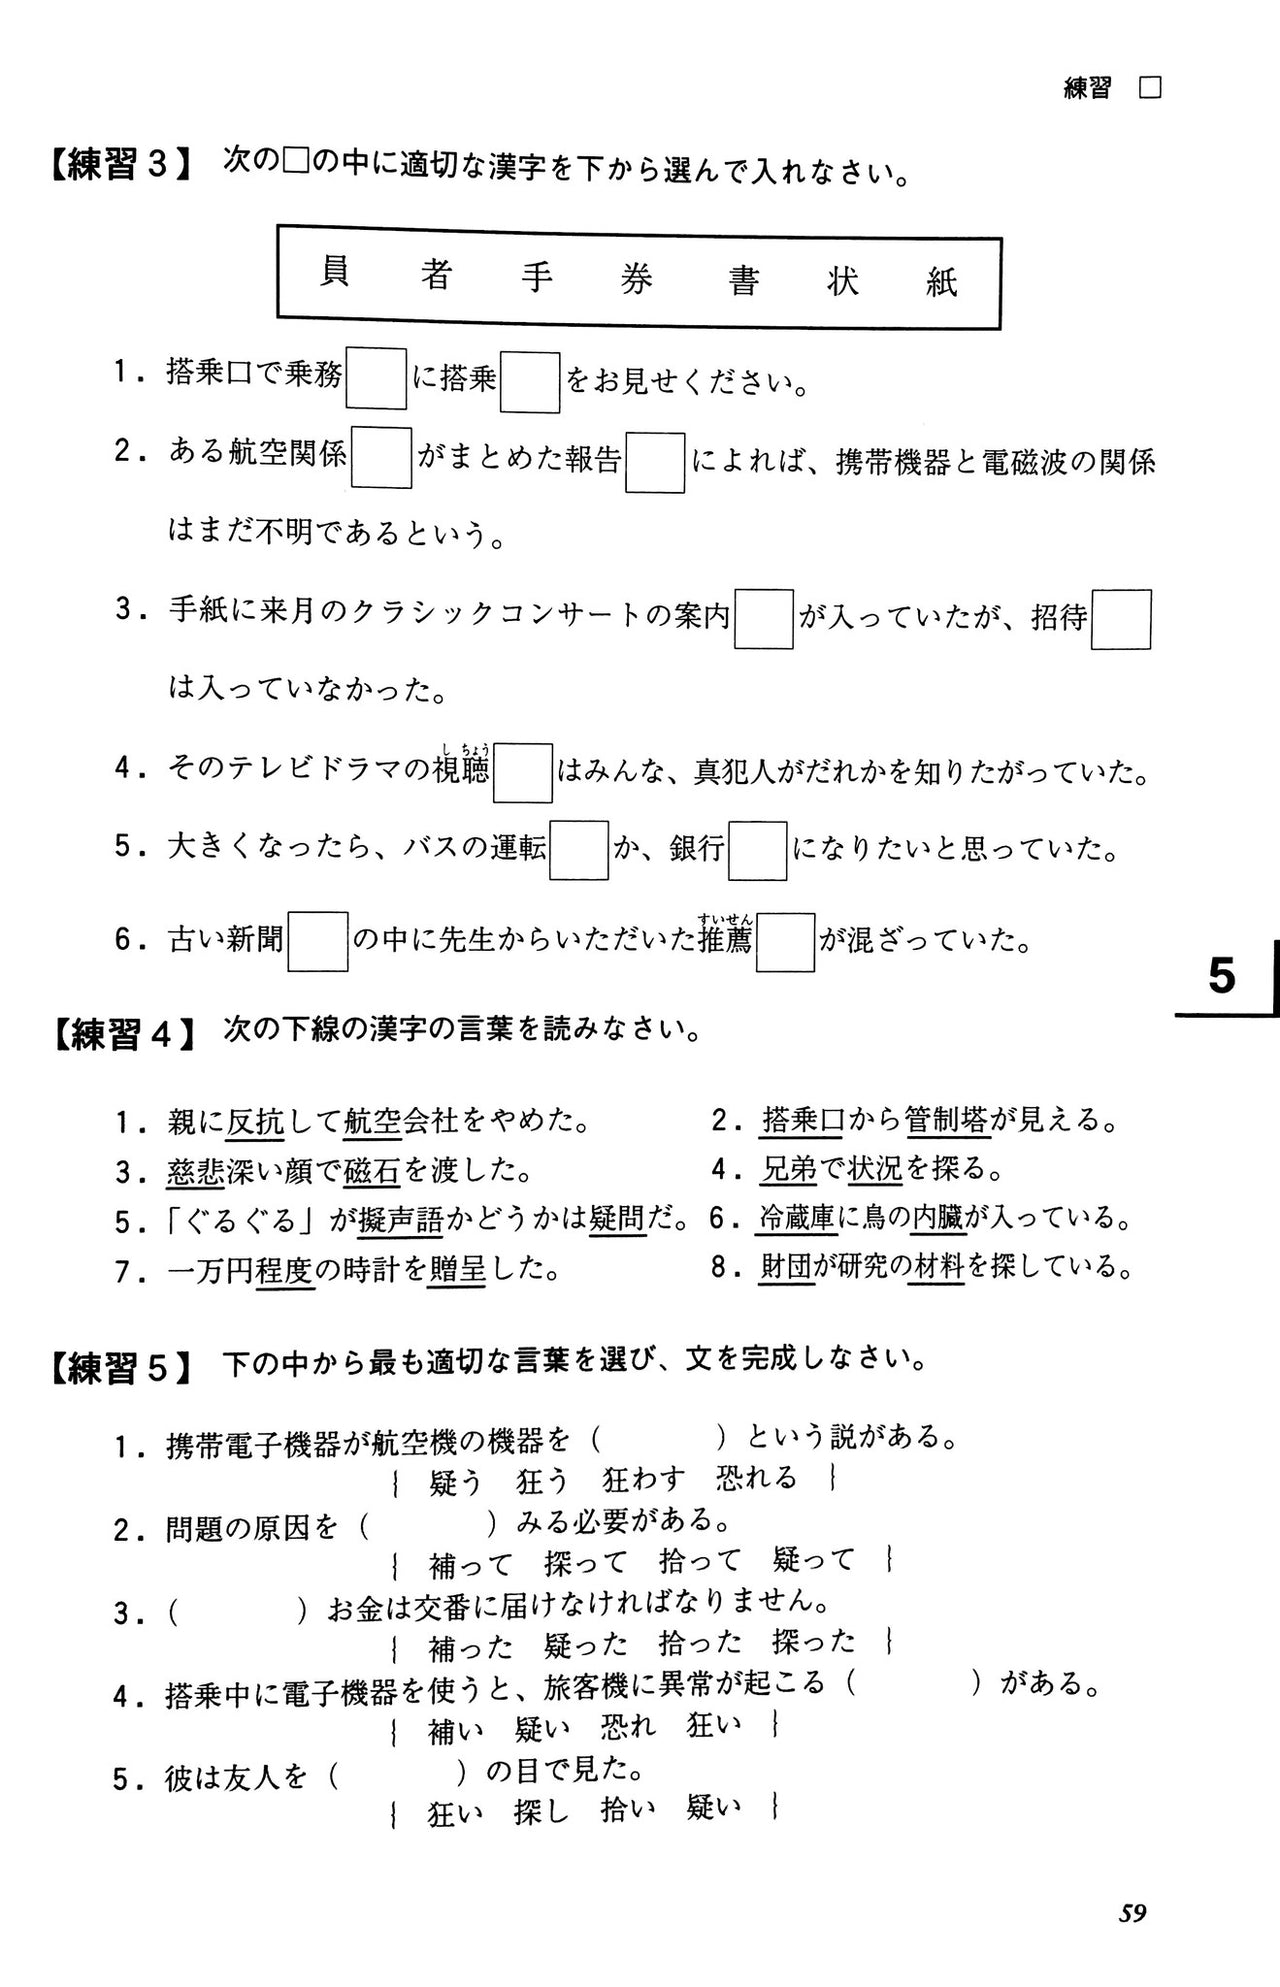 Intermediate Kanji Book Volume 2 4th Edition